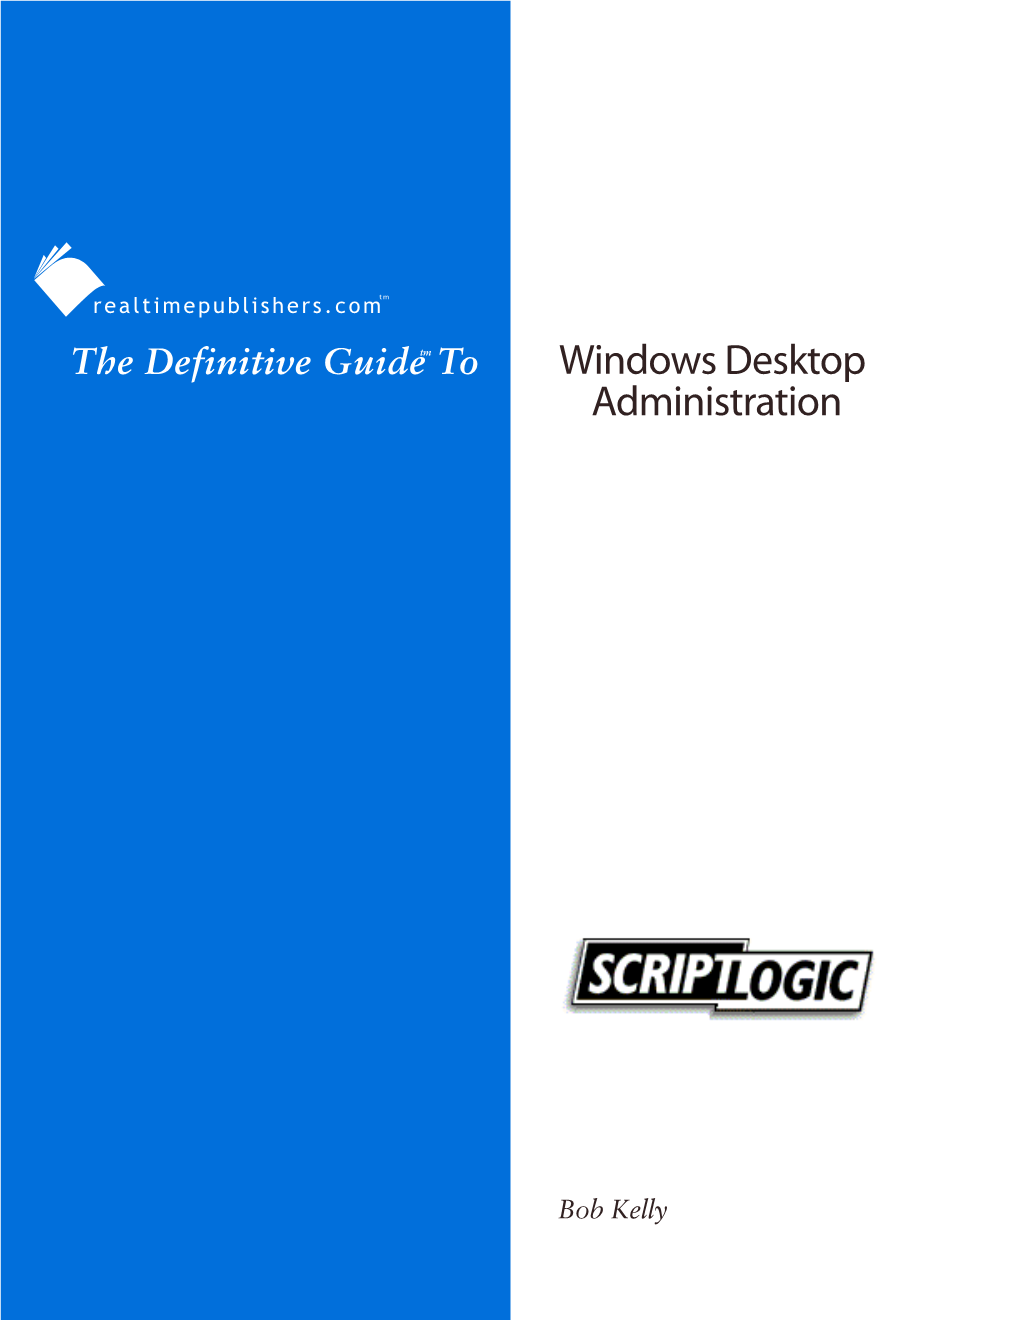 The Defintive Guide to Windows Desktop